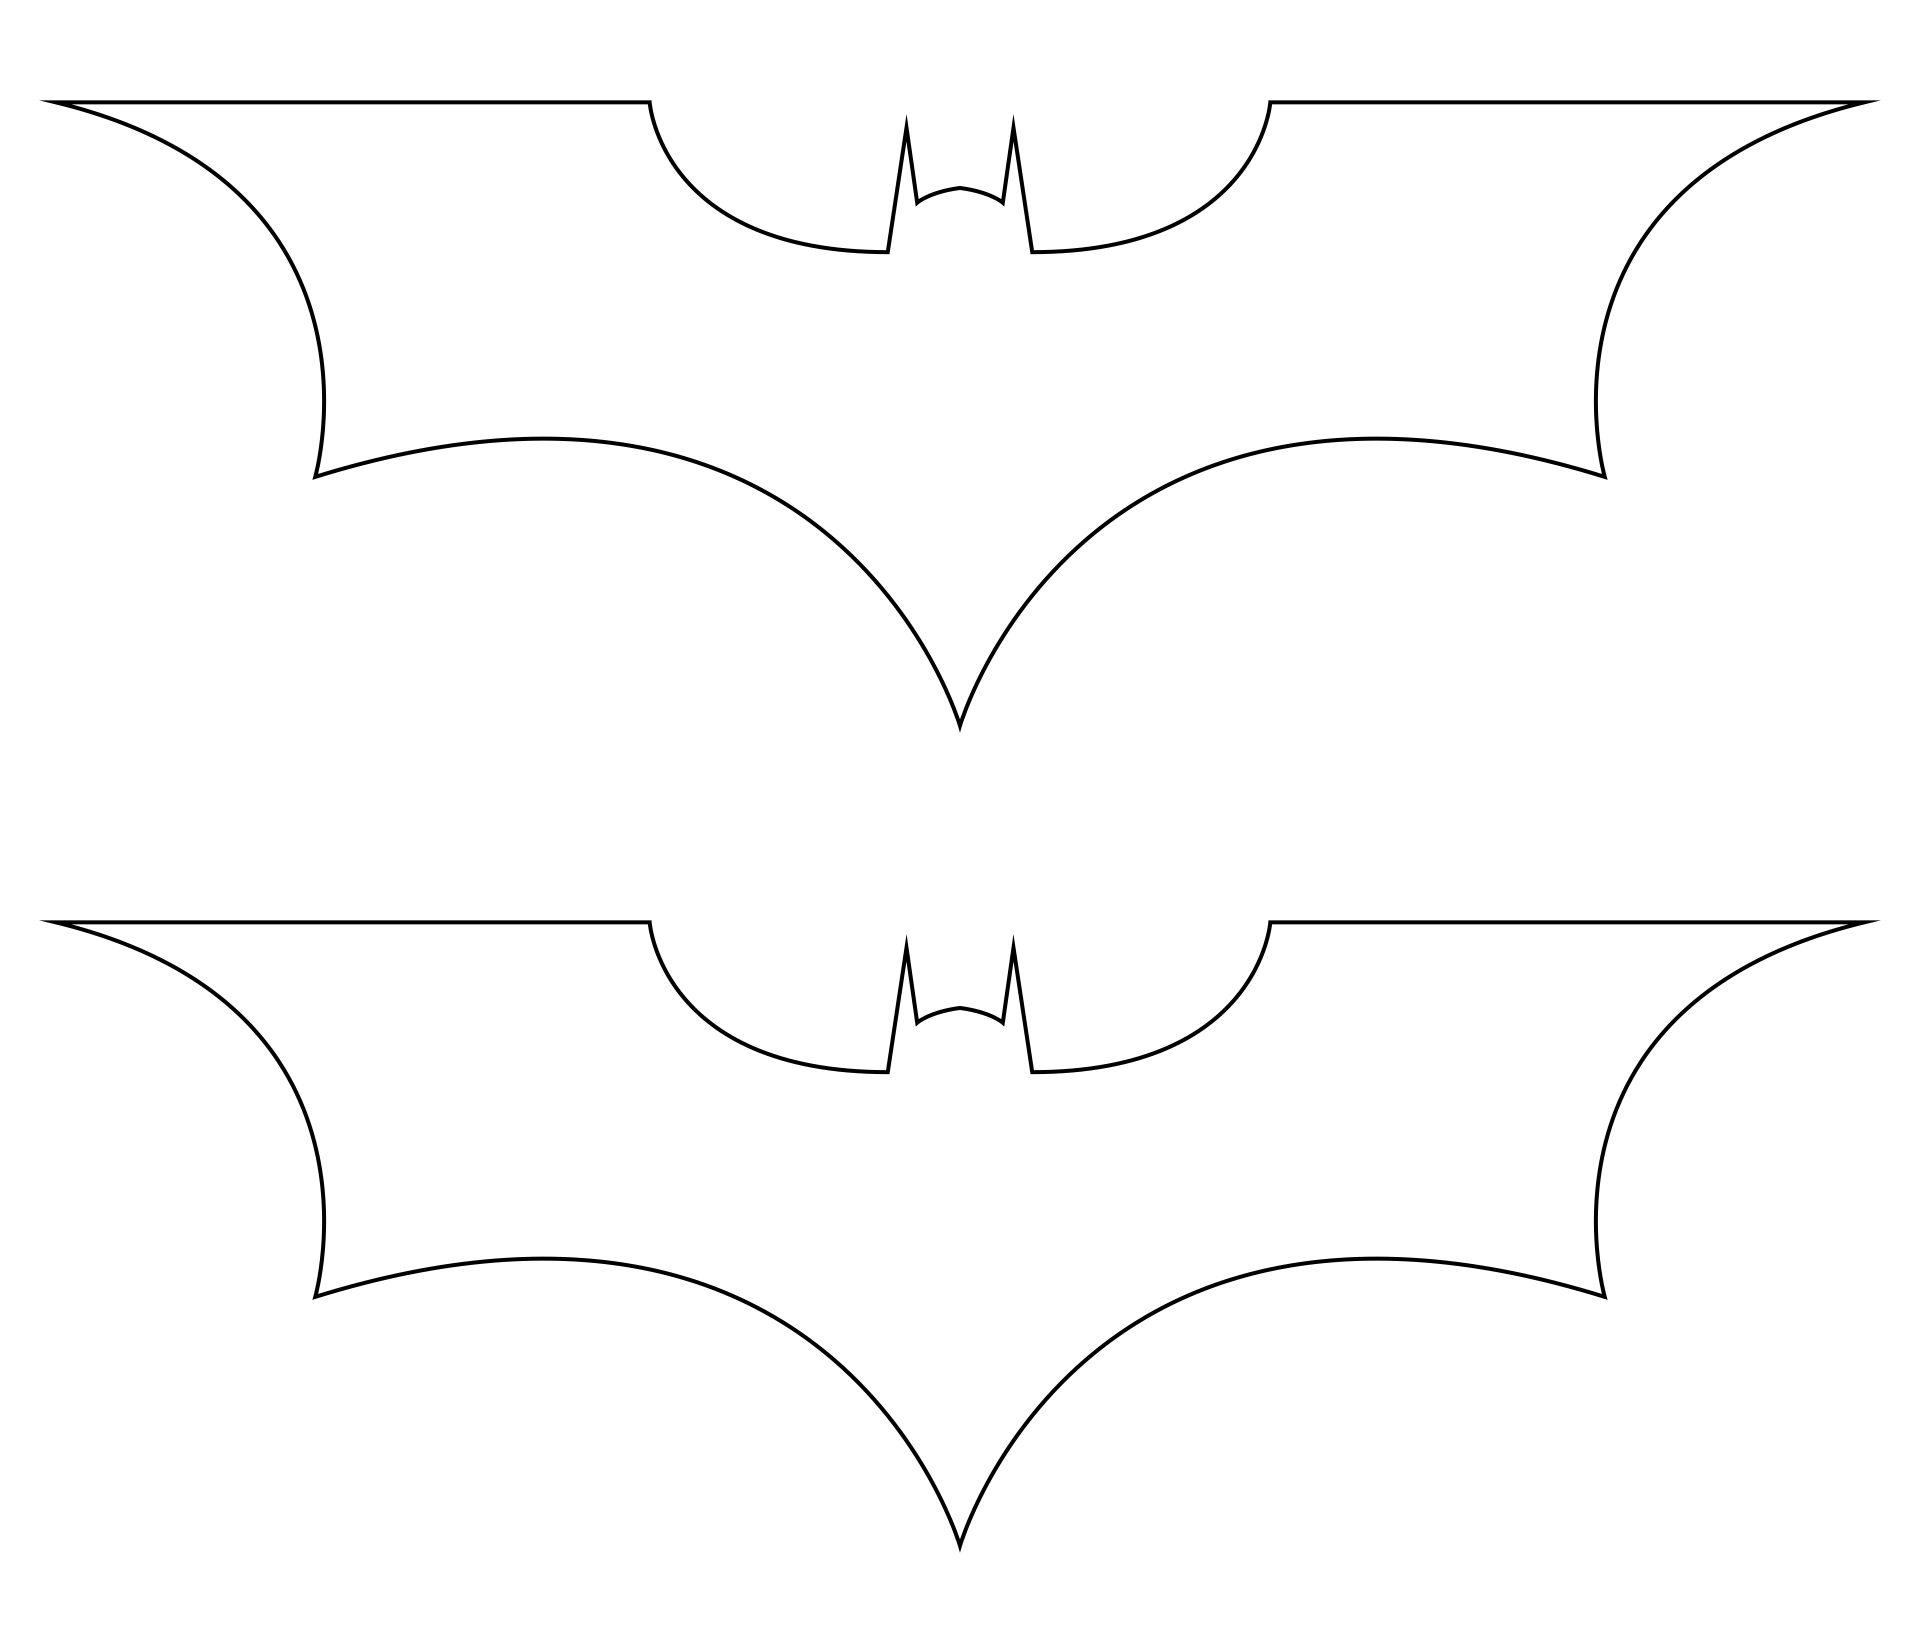 bat-printable